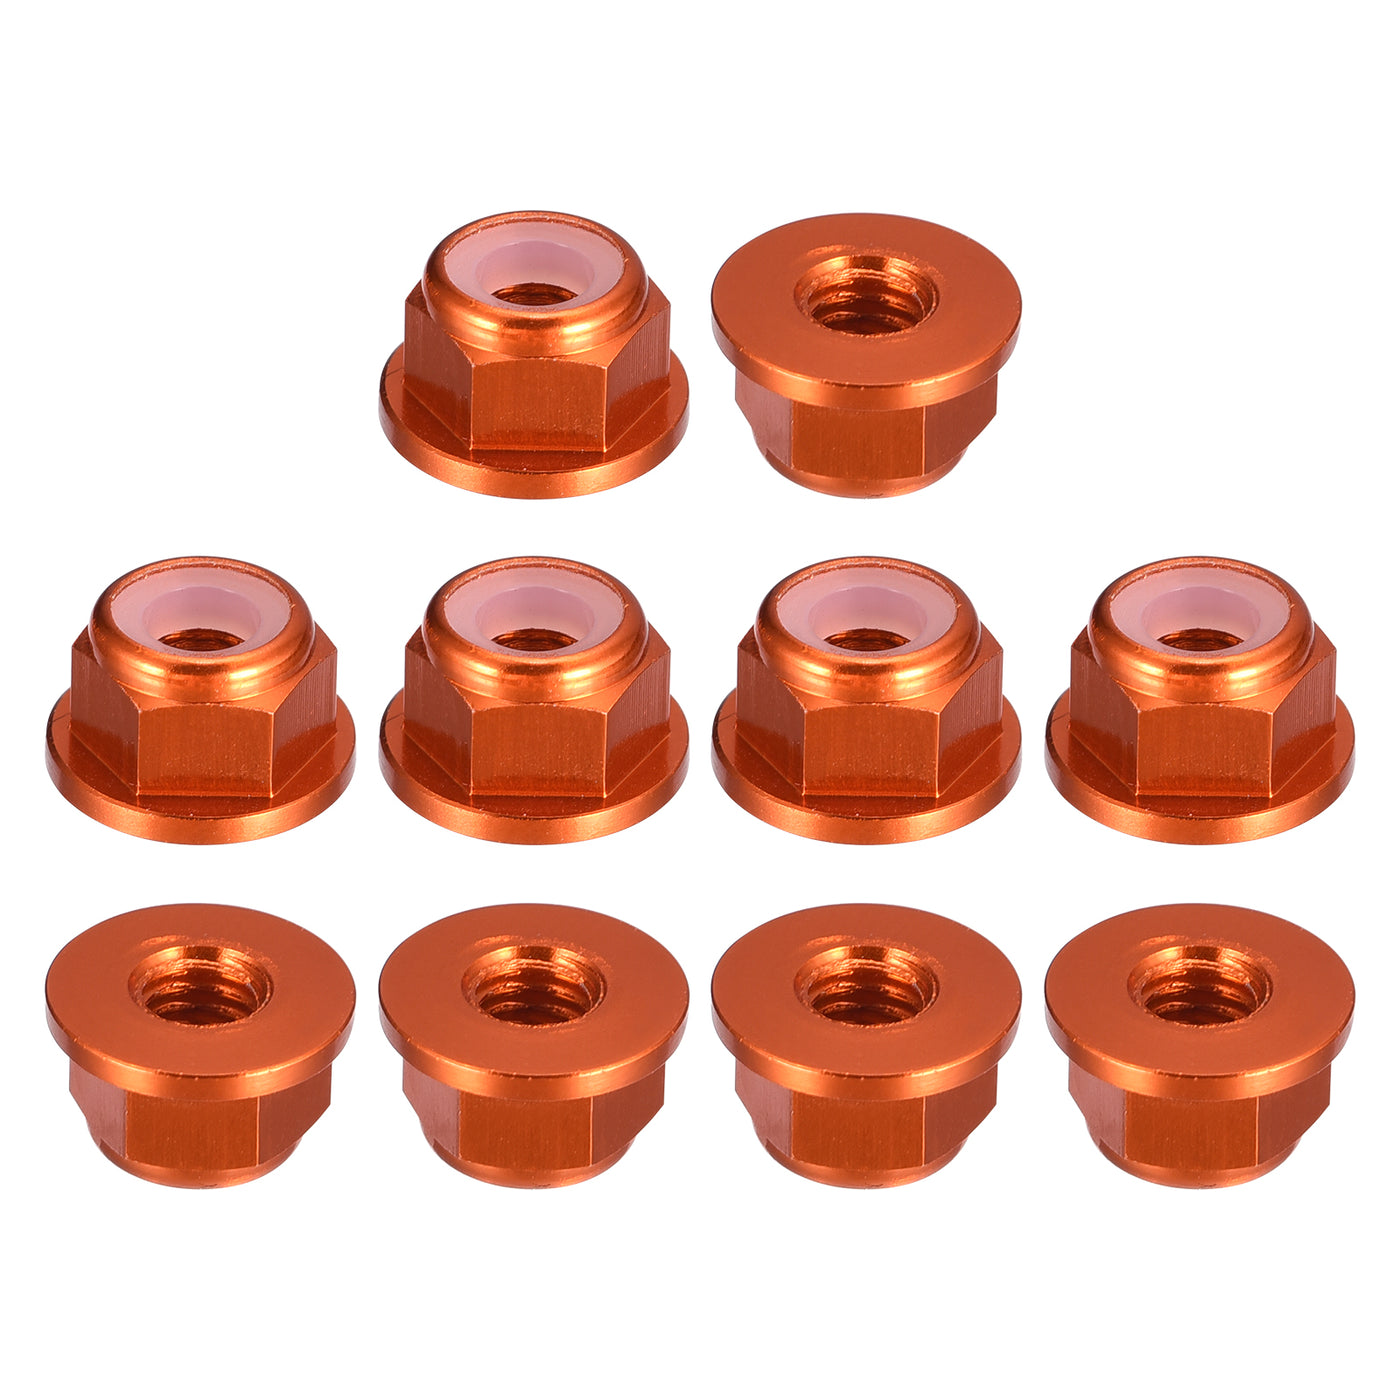 uxcell Uxcell Nylon Insert Hex Lock Nuts, 10pcs - M4 x 0.7mm Aluminum Alloy Self-Locking Nut, Anodizing Flange Lock Nut for Fasteners (Orange)